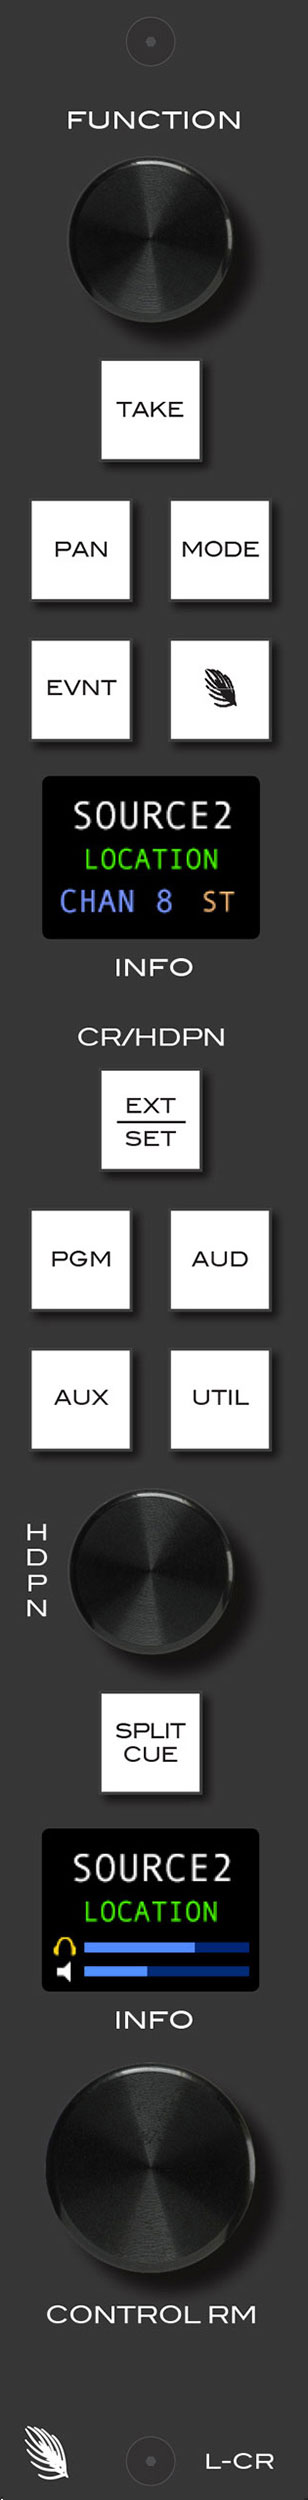 L8 Control Panel